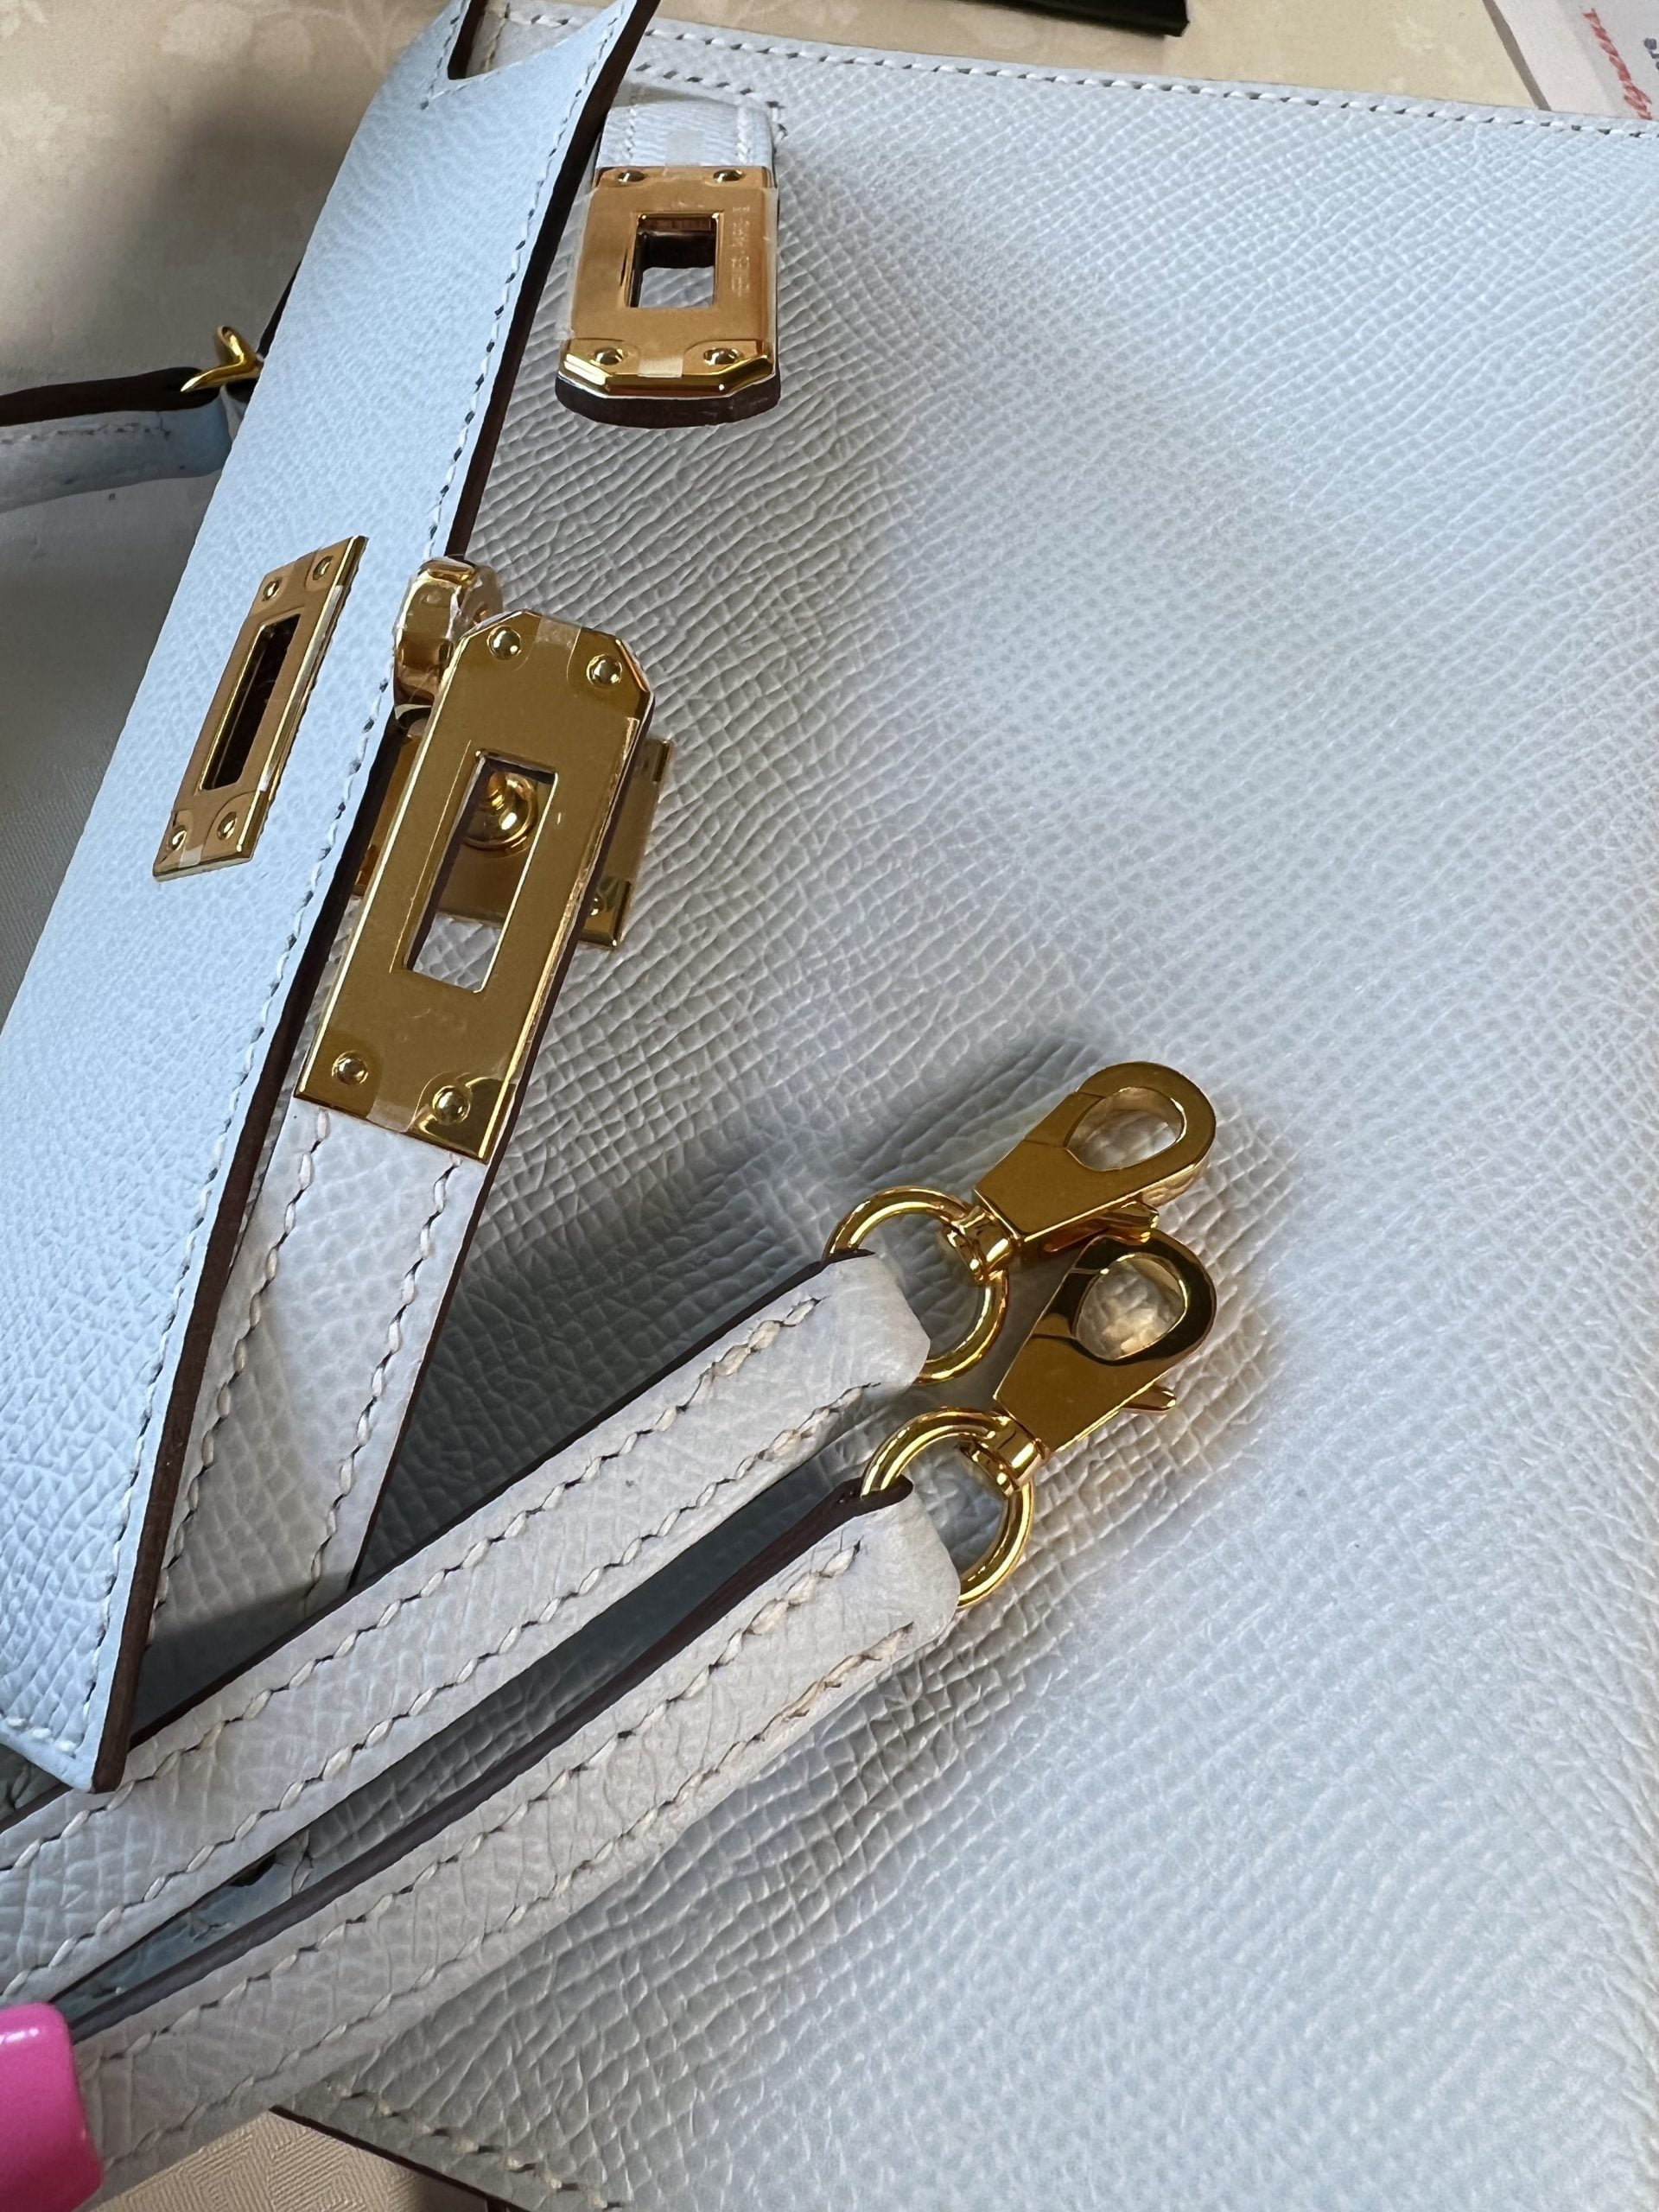 Reveal: Meet My New Hermès Mini Kelly in the Prettiest Shade of Blue